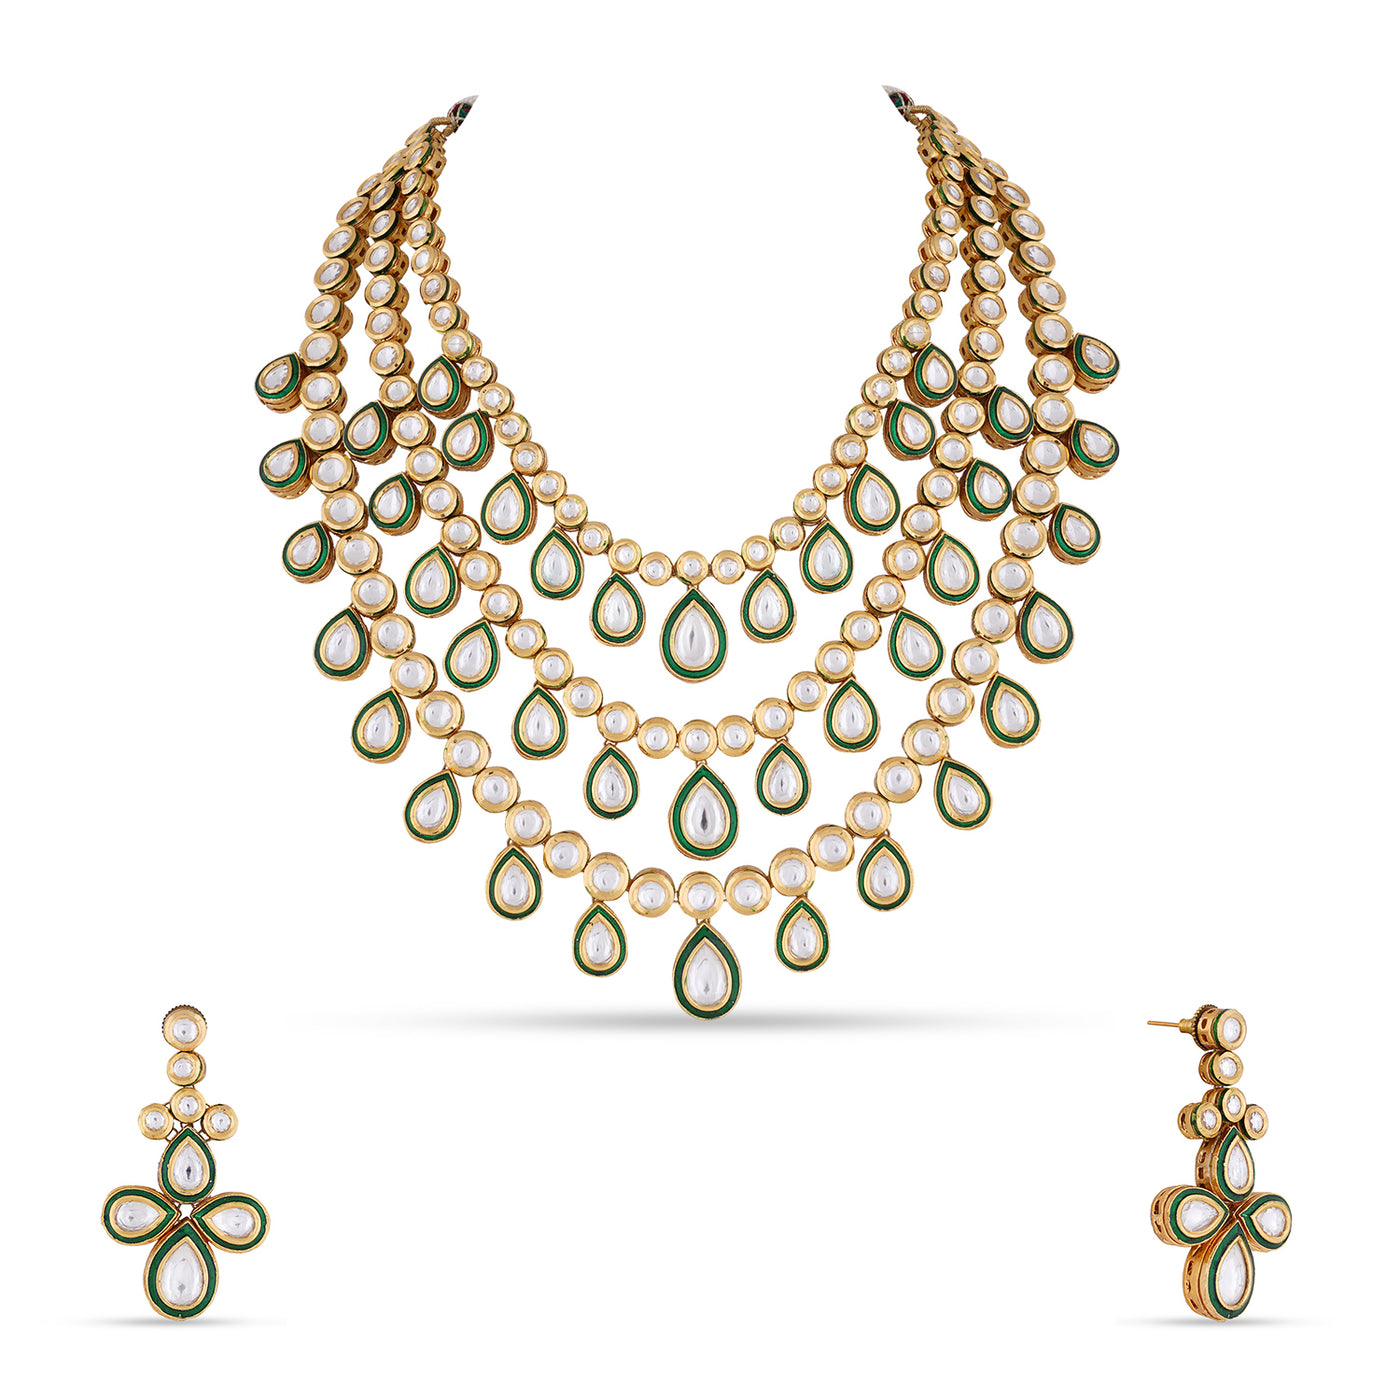  Polki Studded Triple Strand Necklace